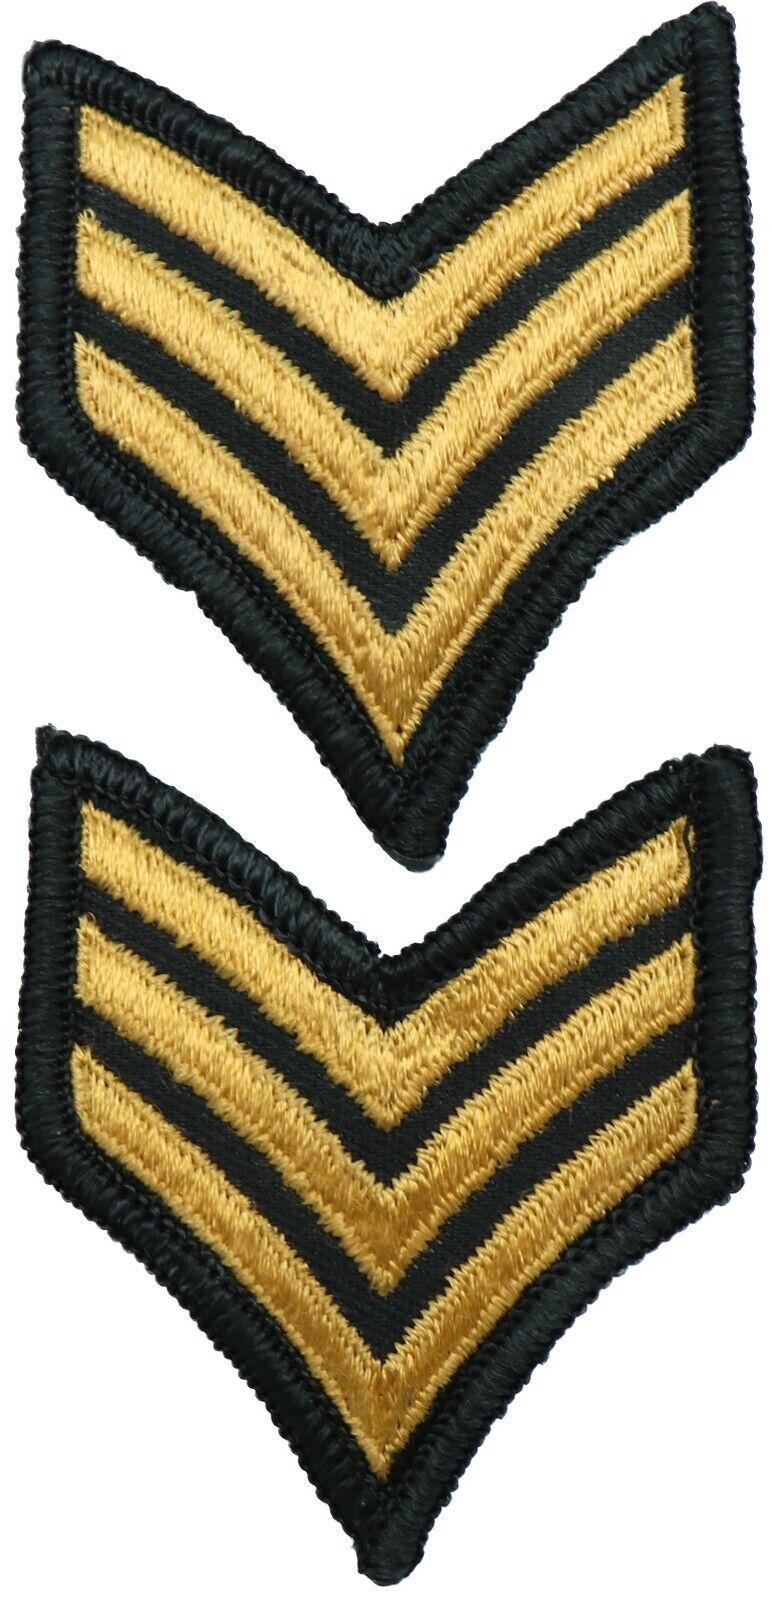 2 Vietnam Era US Army Sergeant Green Stripes Patch Pair Uniform Rank E-5 E5